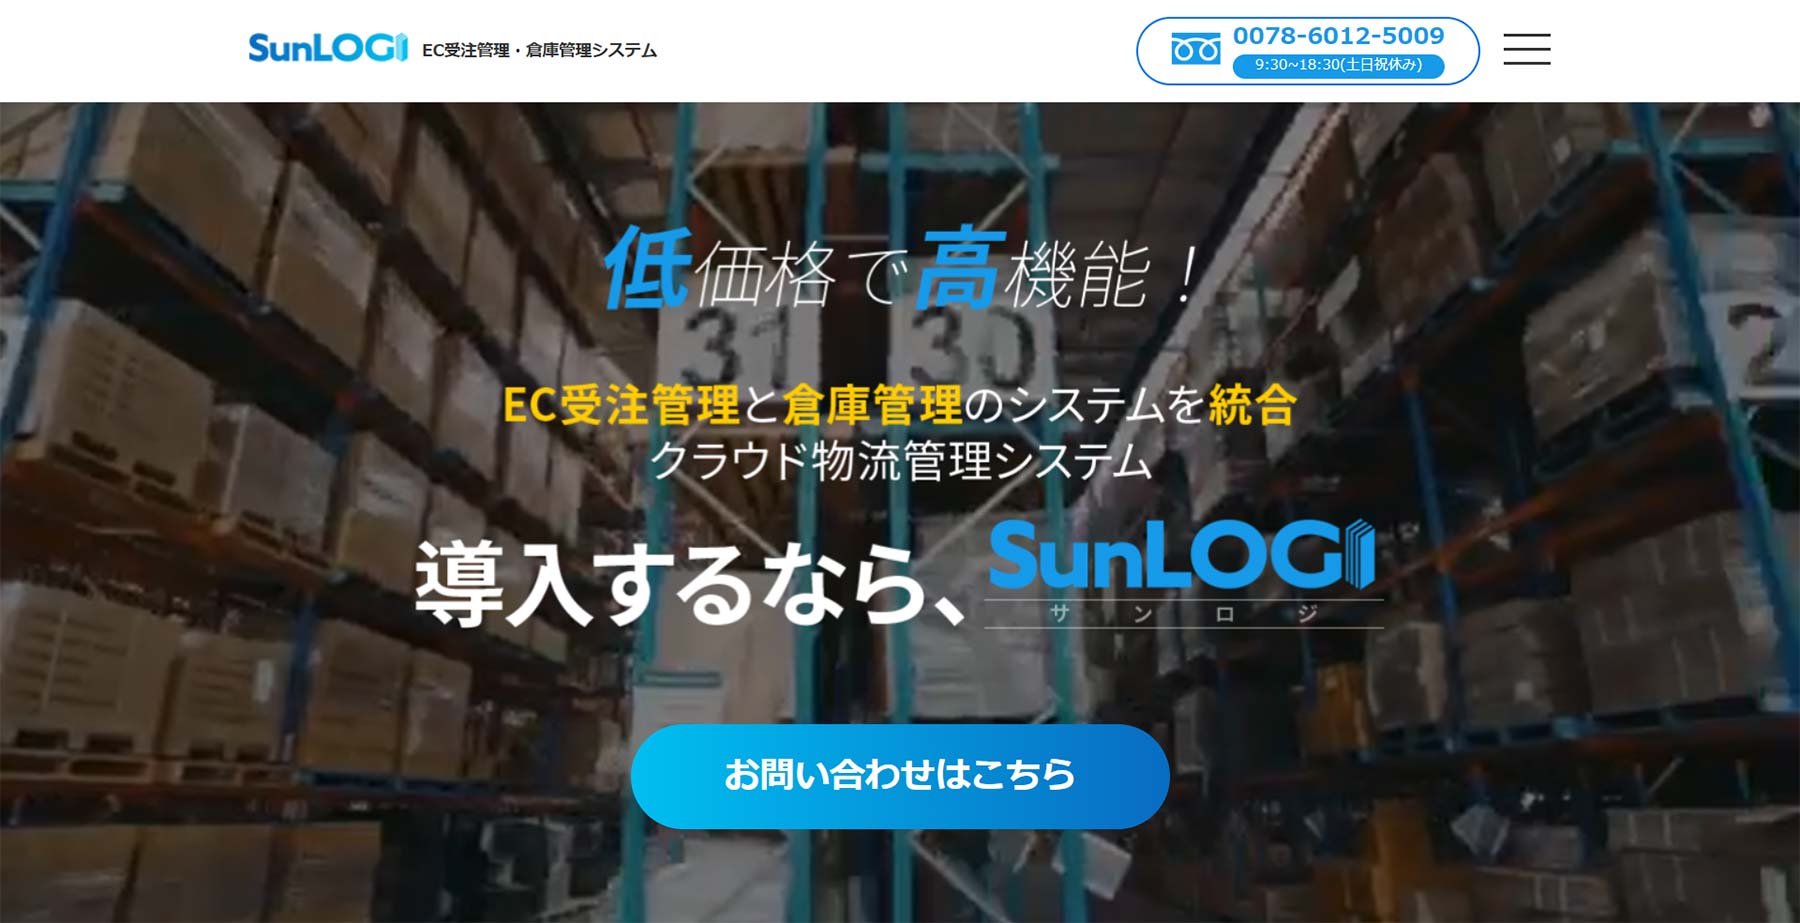 SunLOGI公式Webサイト